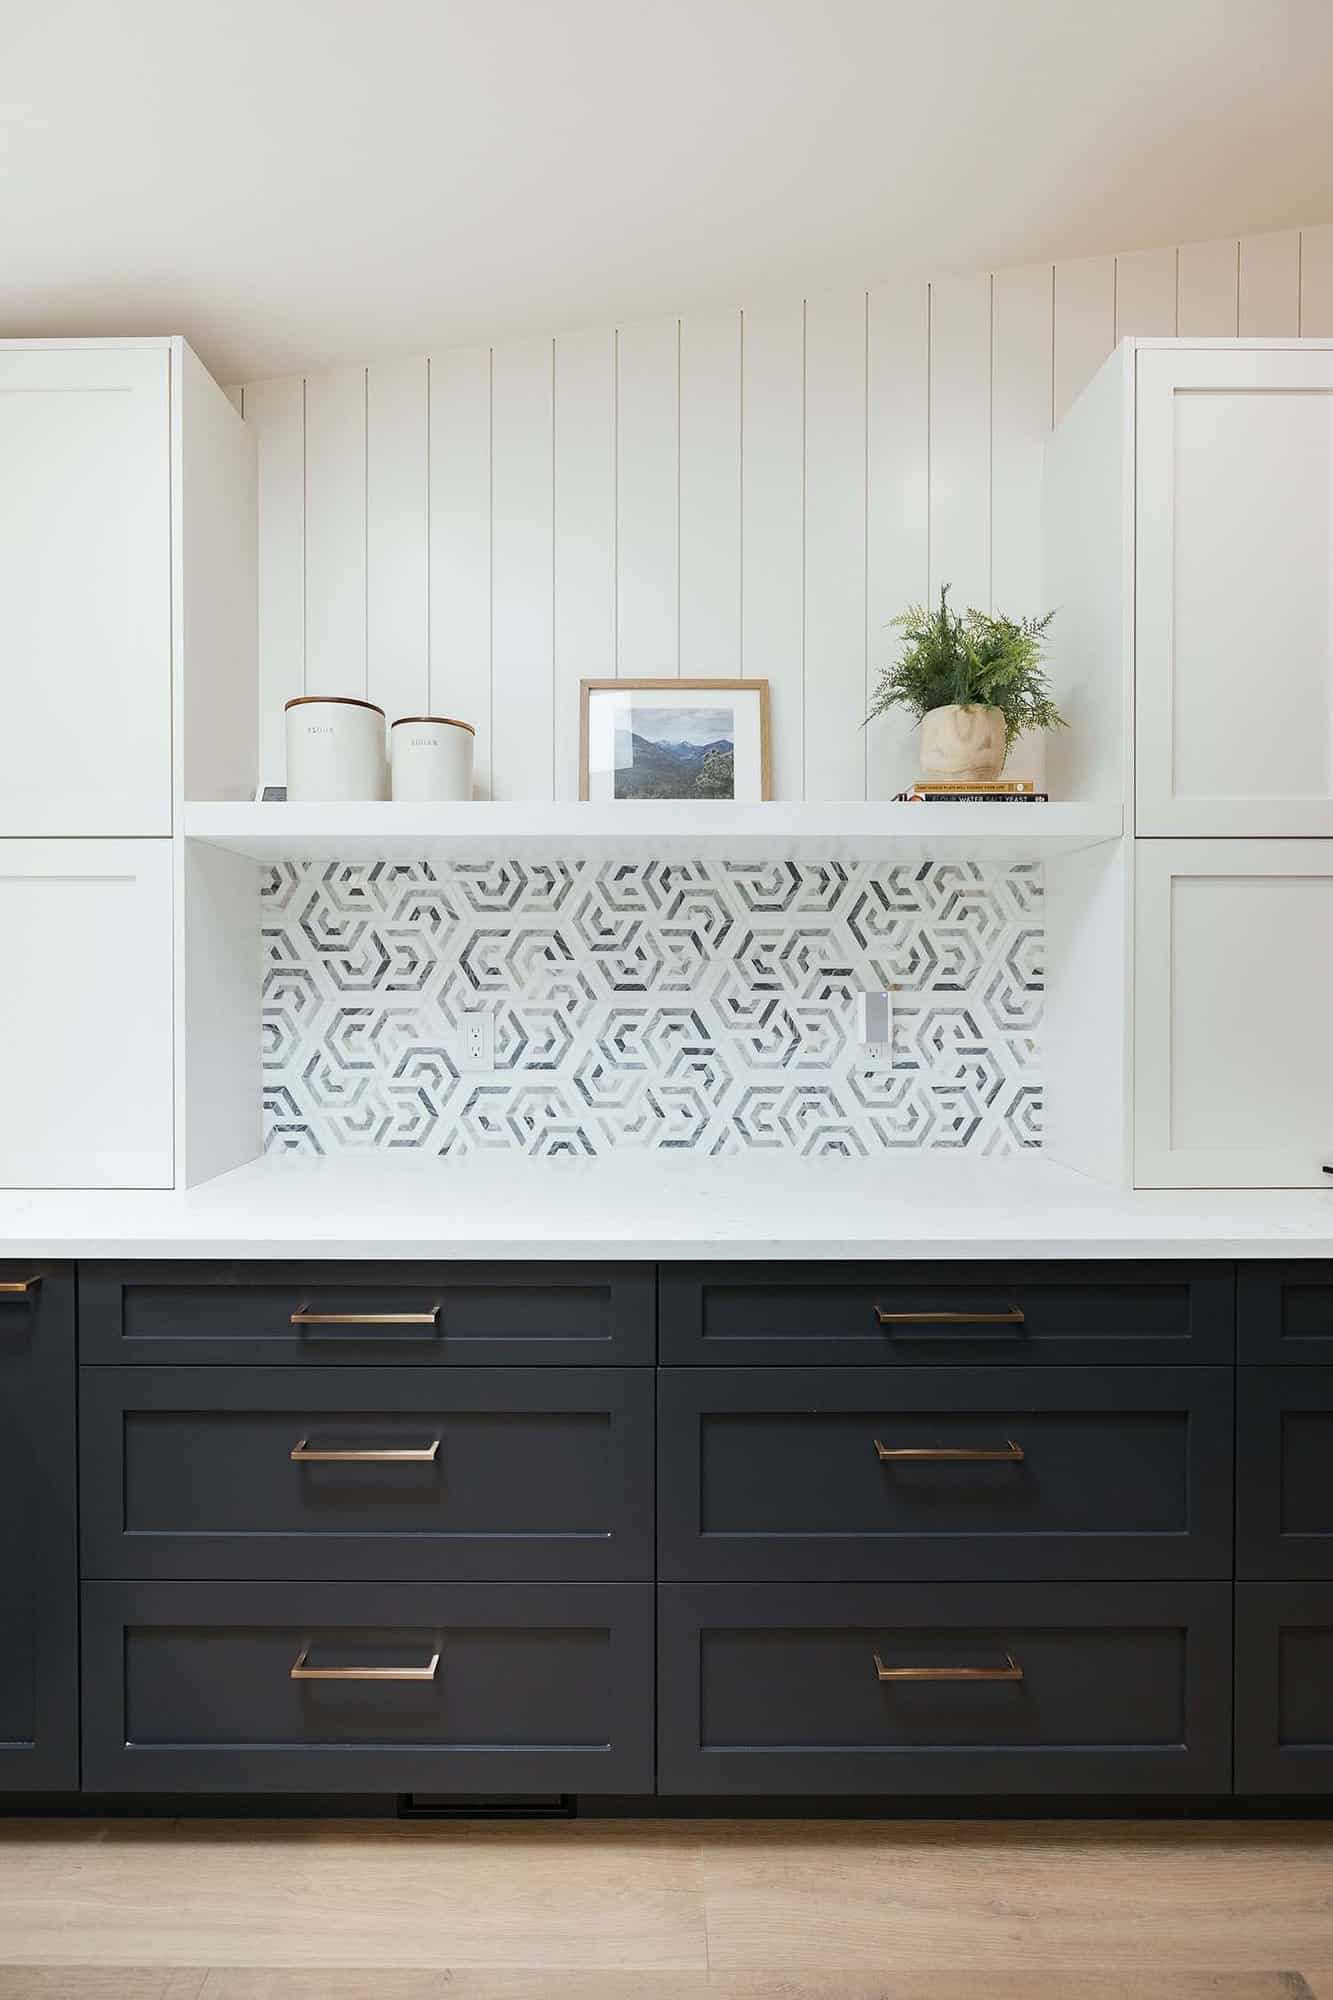 modern kitchen with open shelves and a pattern backsplash tile